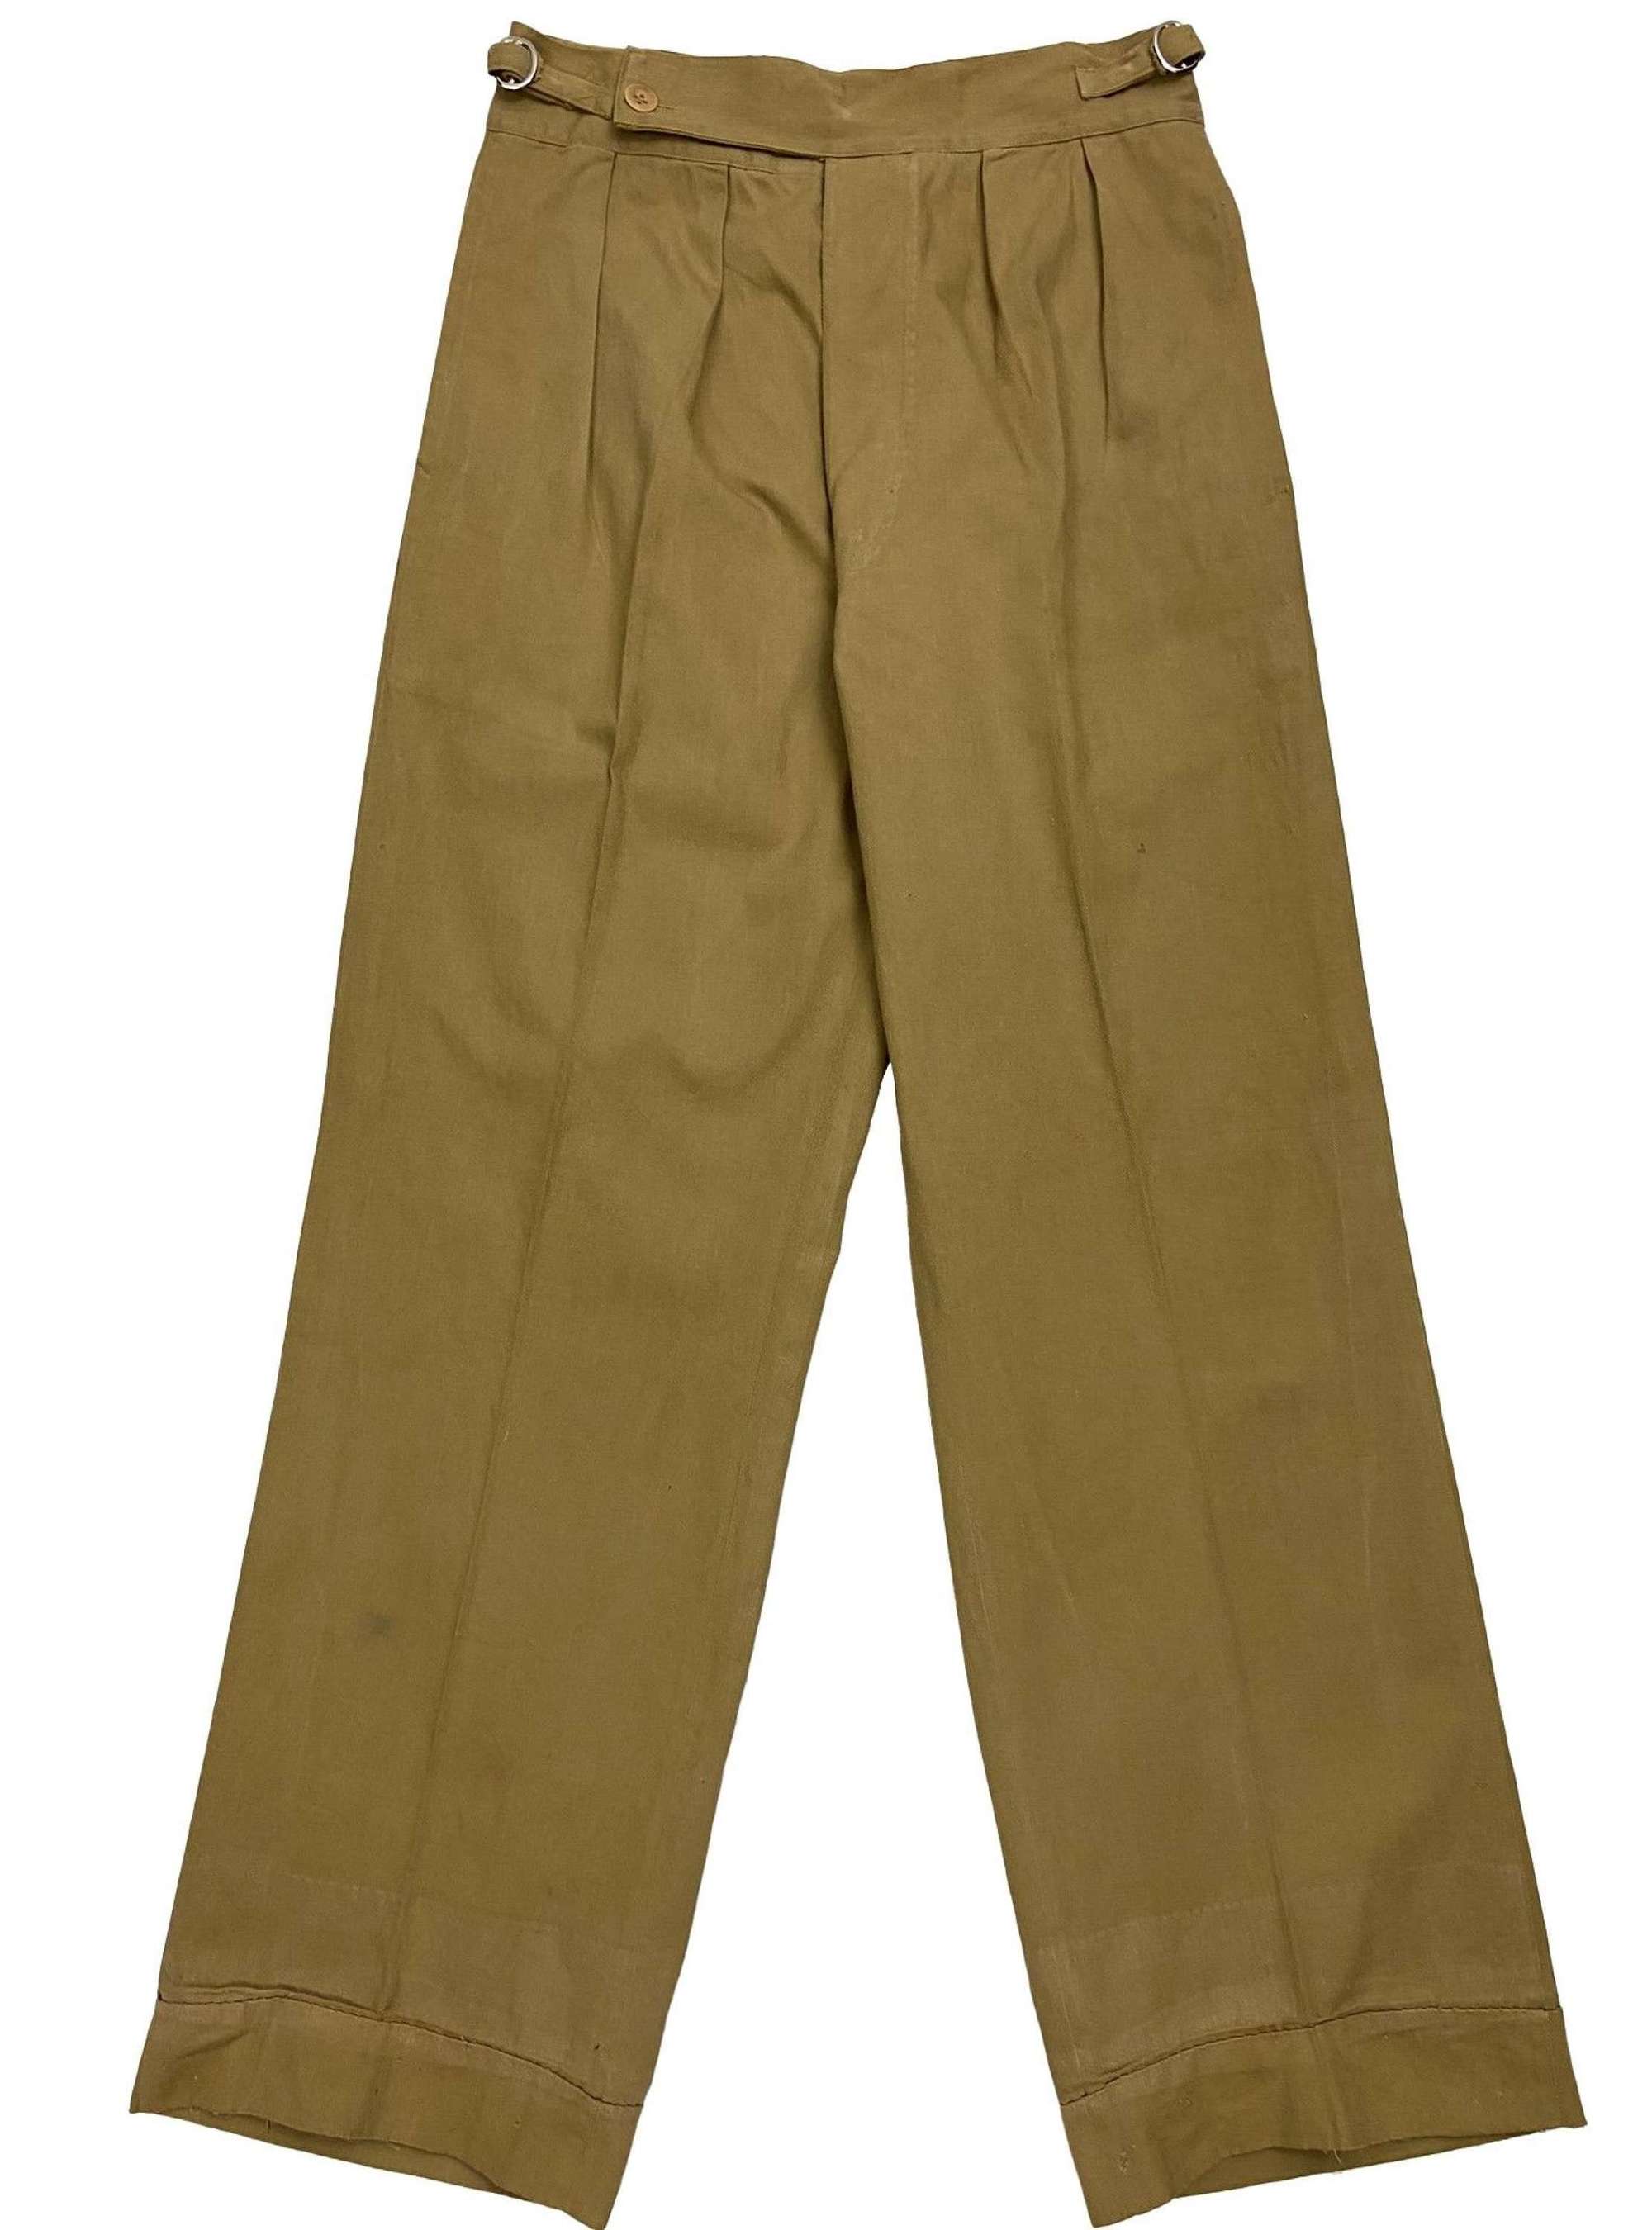 Original 1940s British Military Khaki Drill Trousers - Size 28